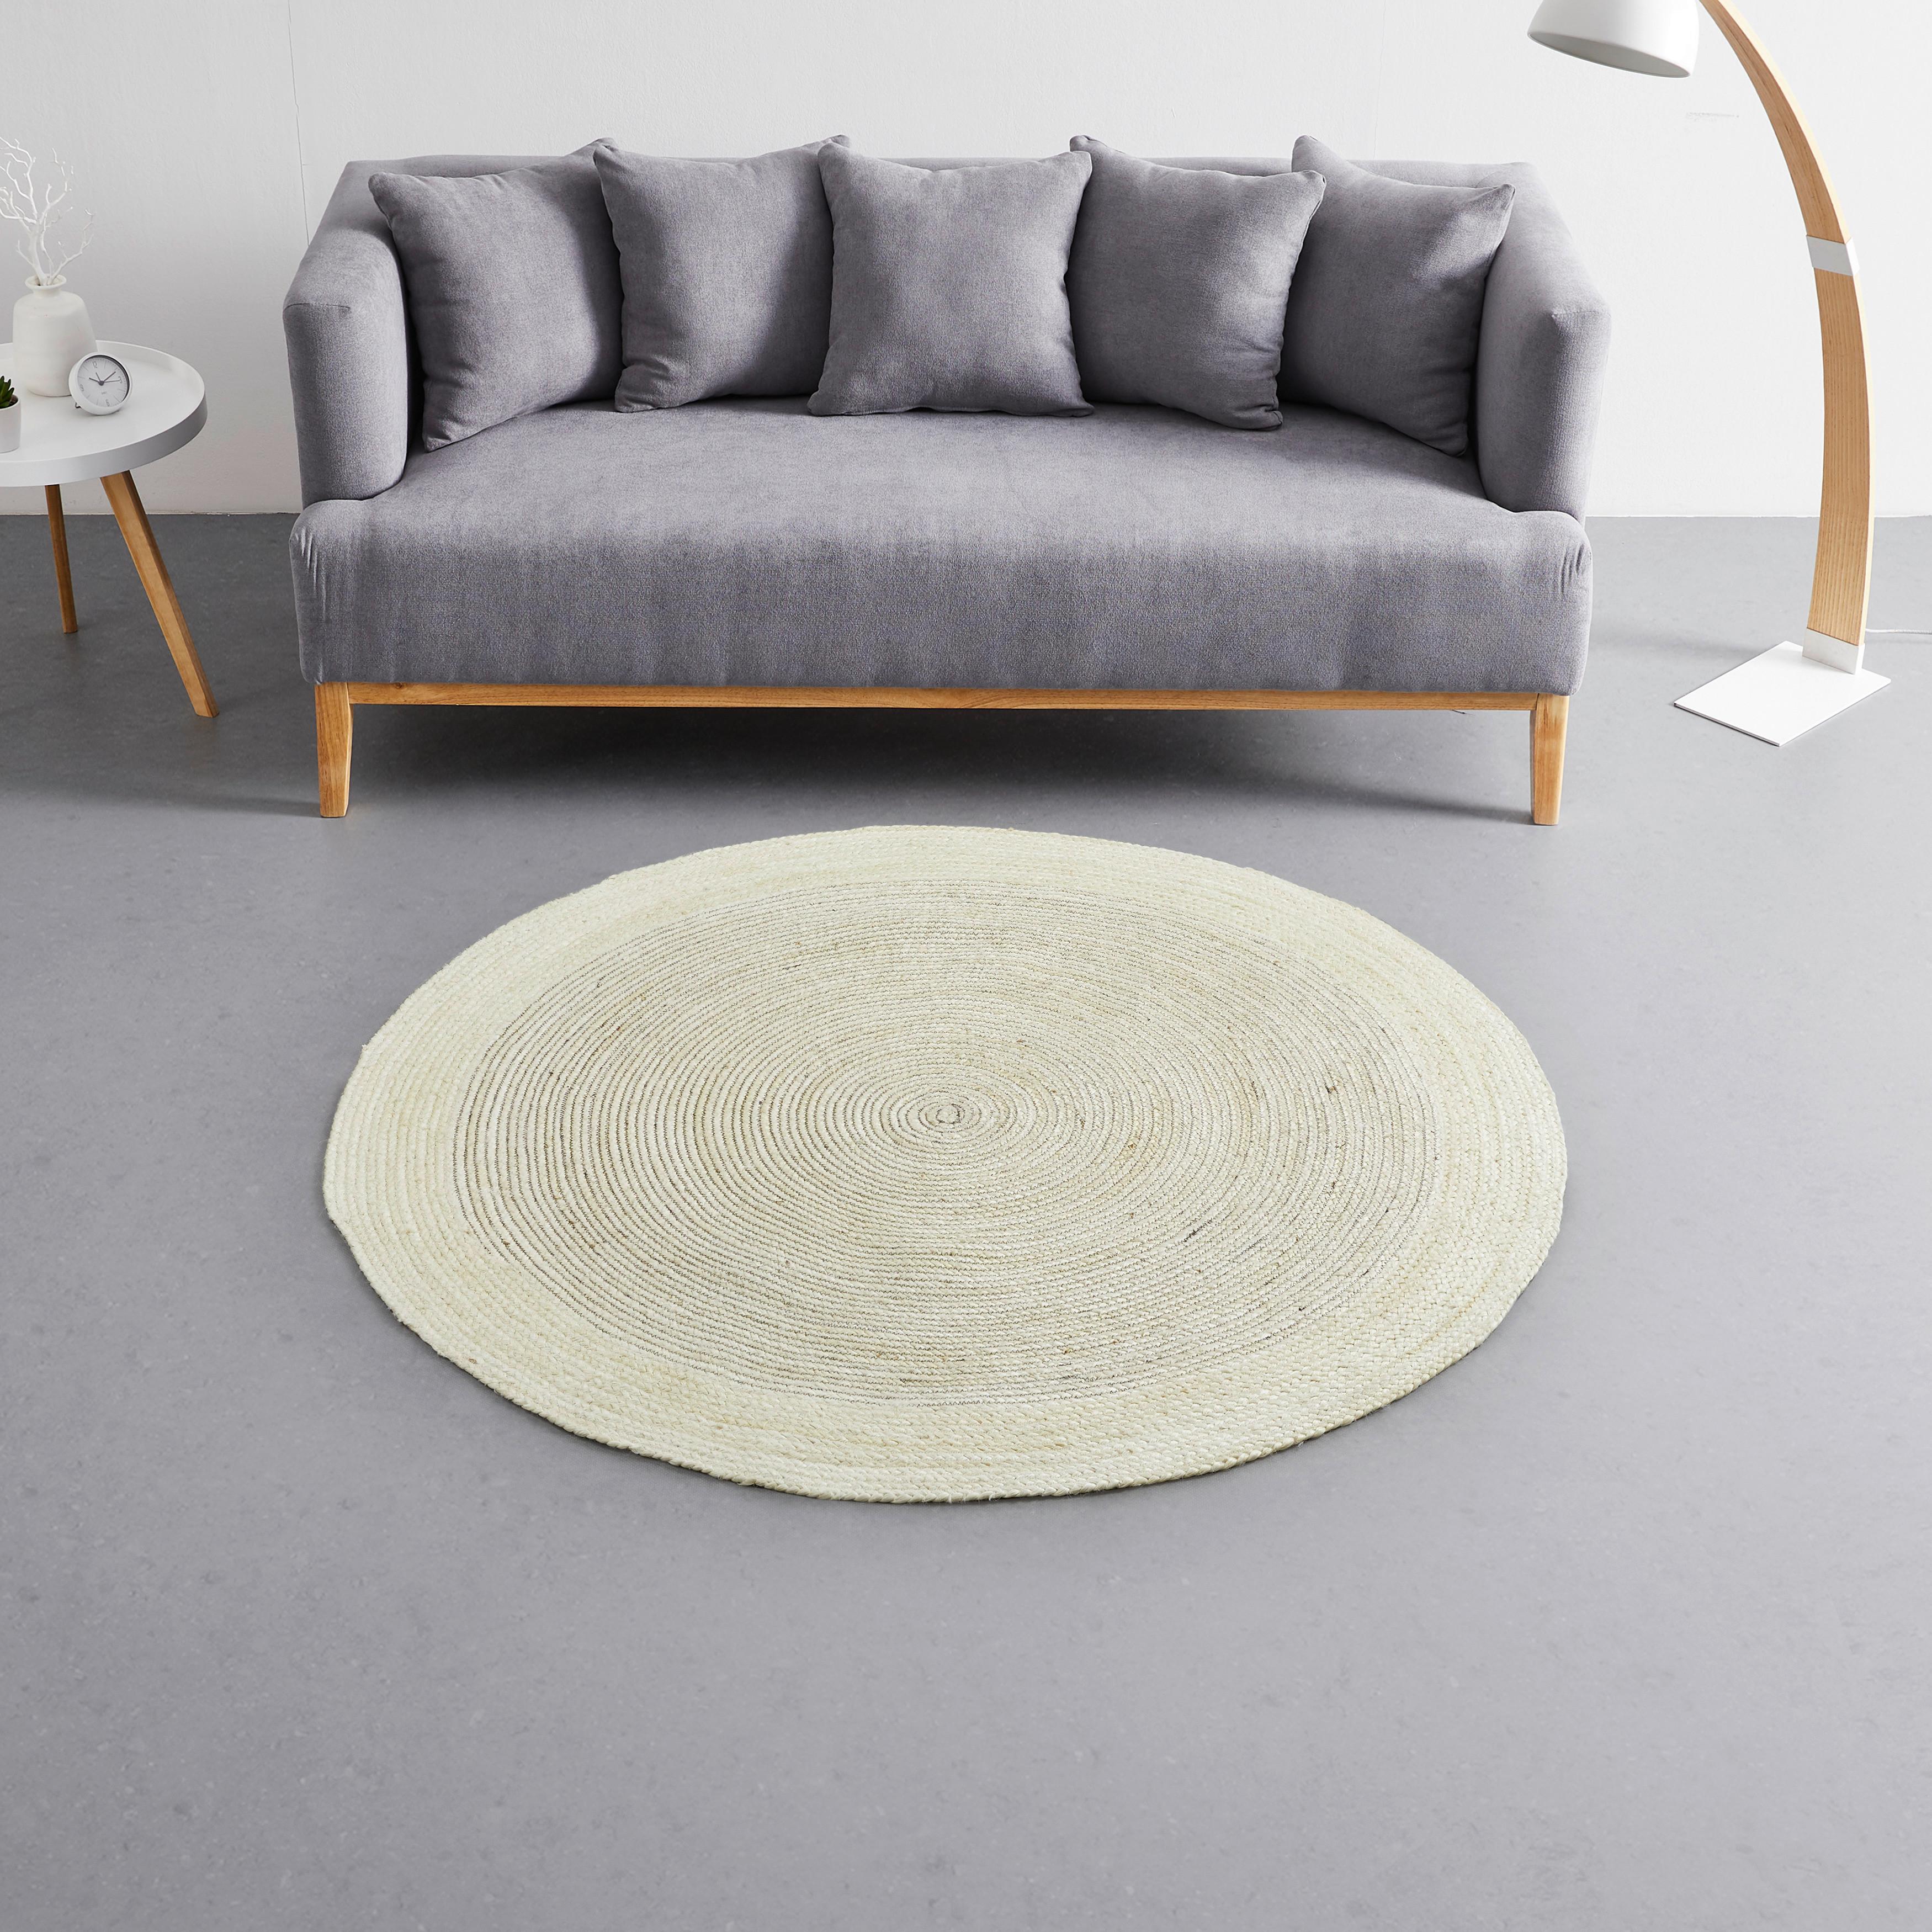 Teppich Kiara in Weiß/Grau Ø ca. 160cm - Weiß, MODERN, Textil (160cm) - Bessagi Home